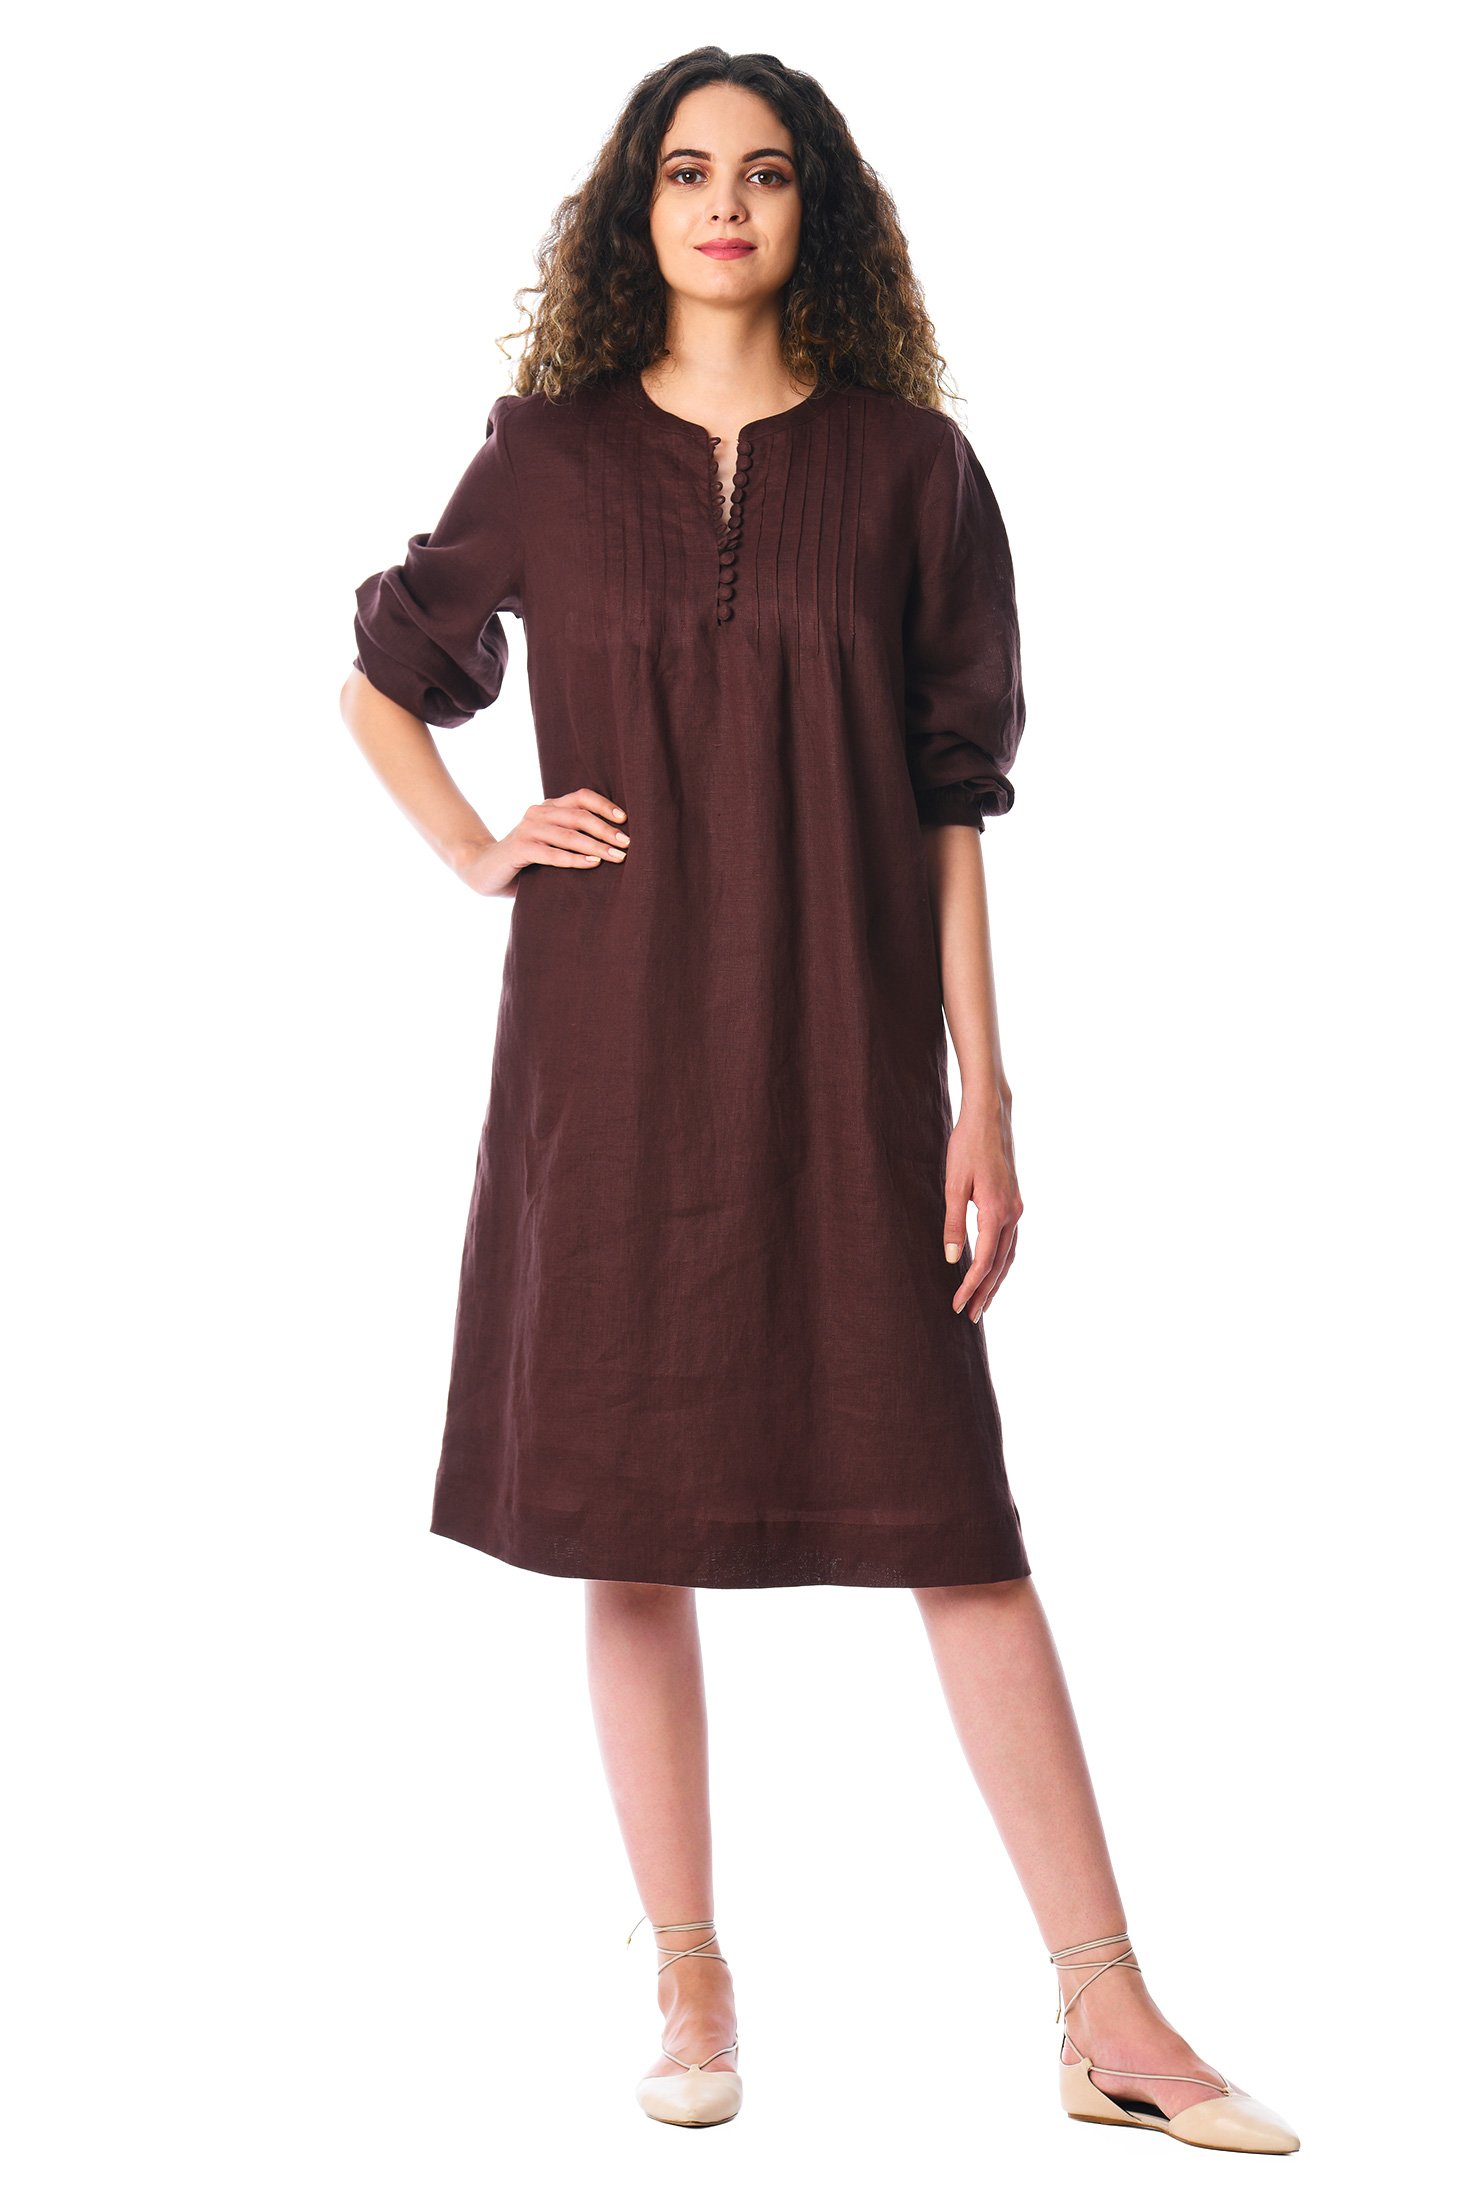 Shop Pintuck pleat linen shift dress | eShakti